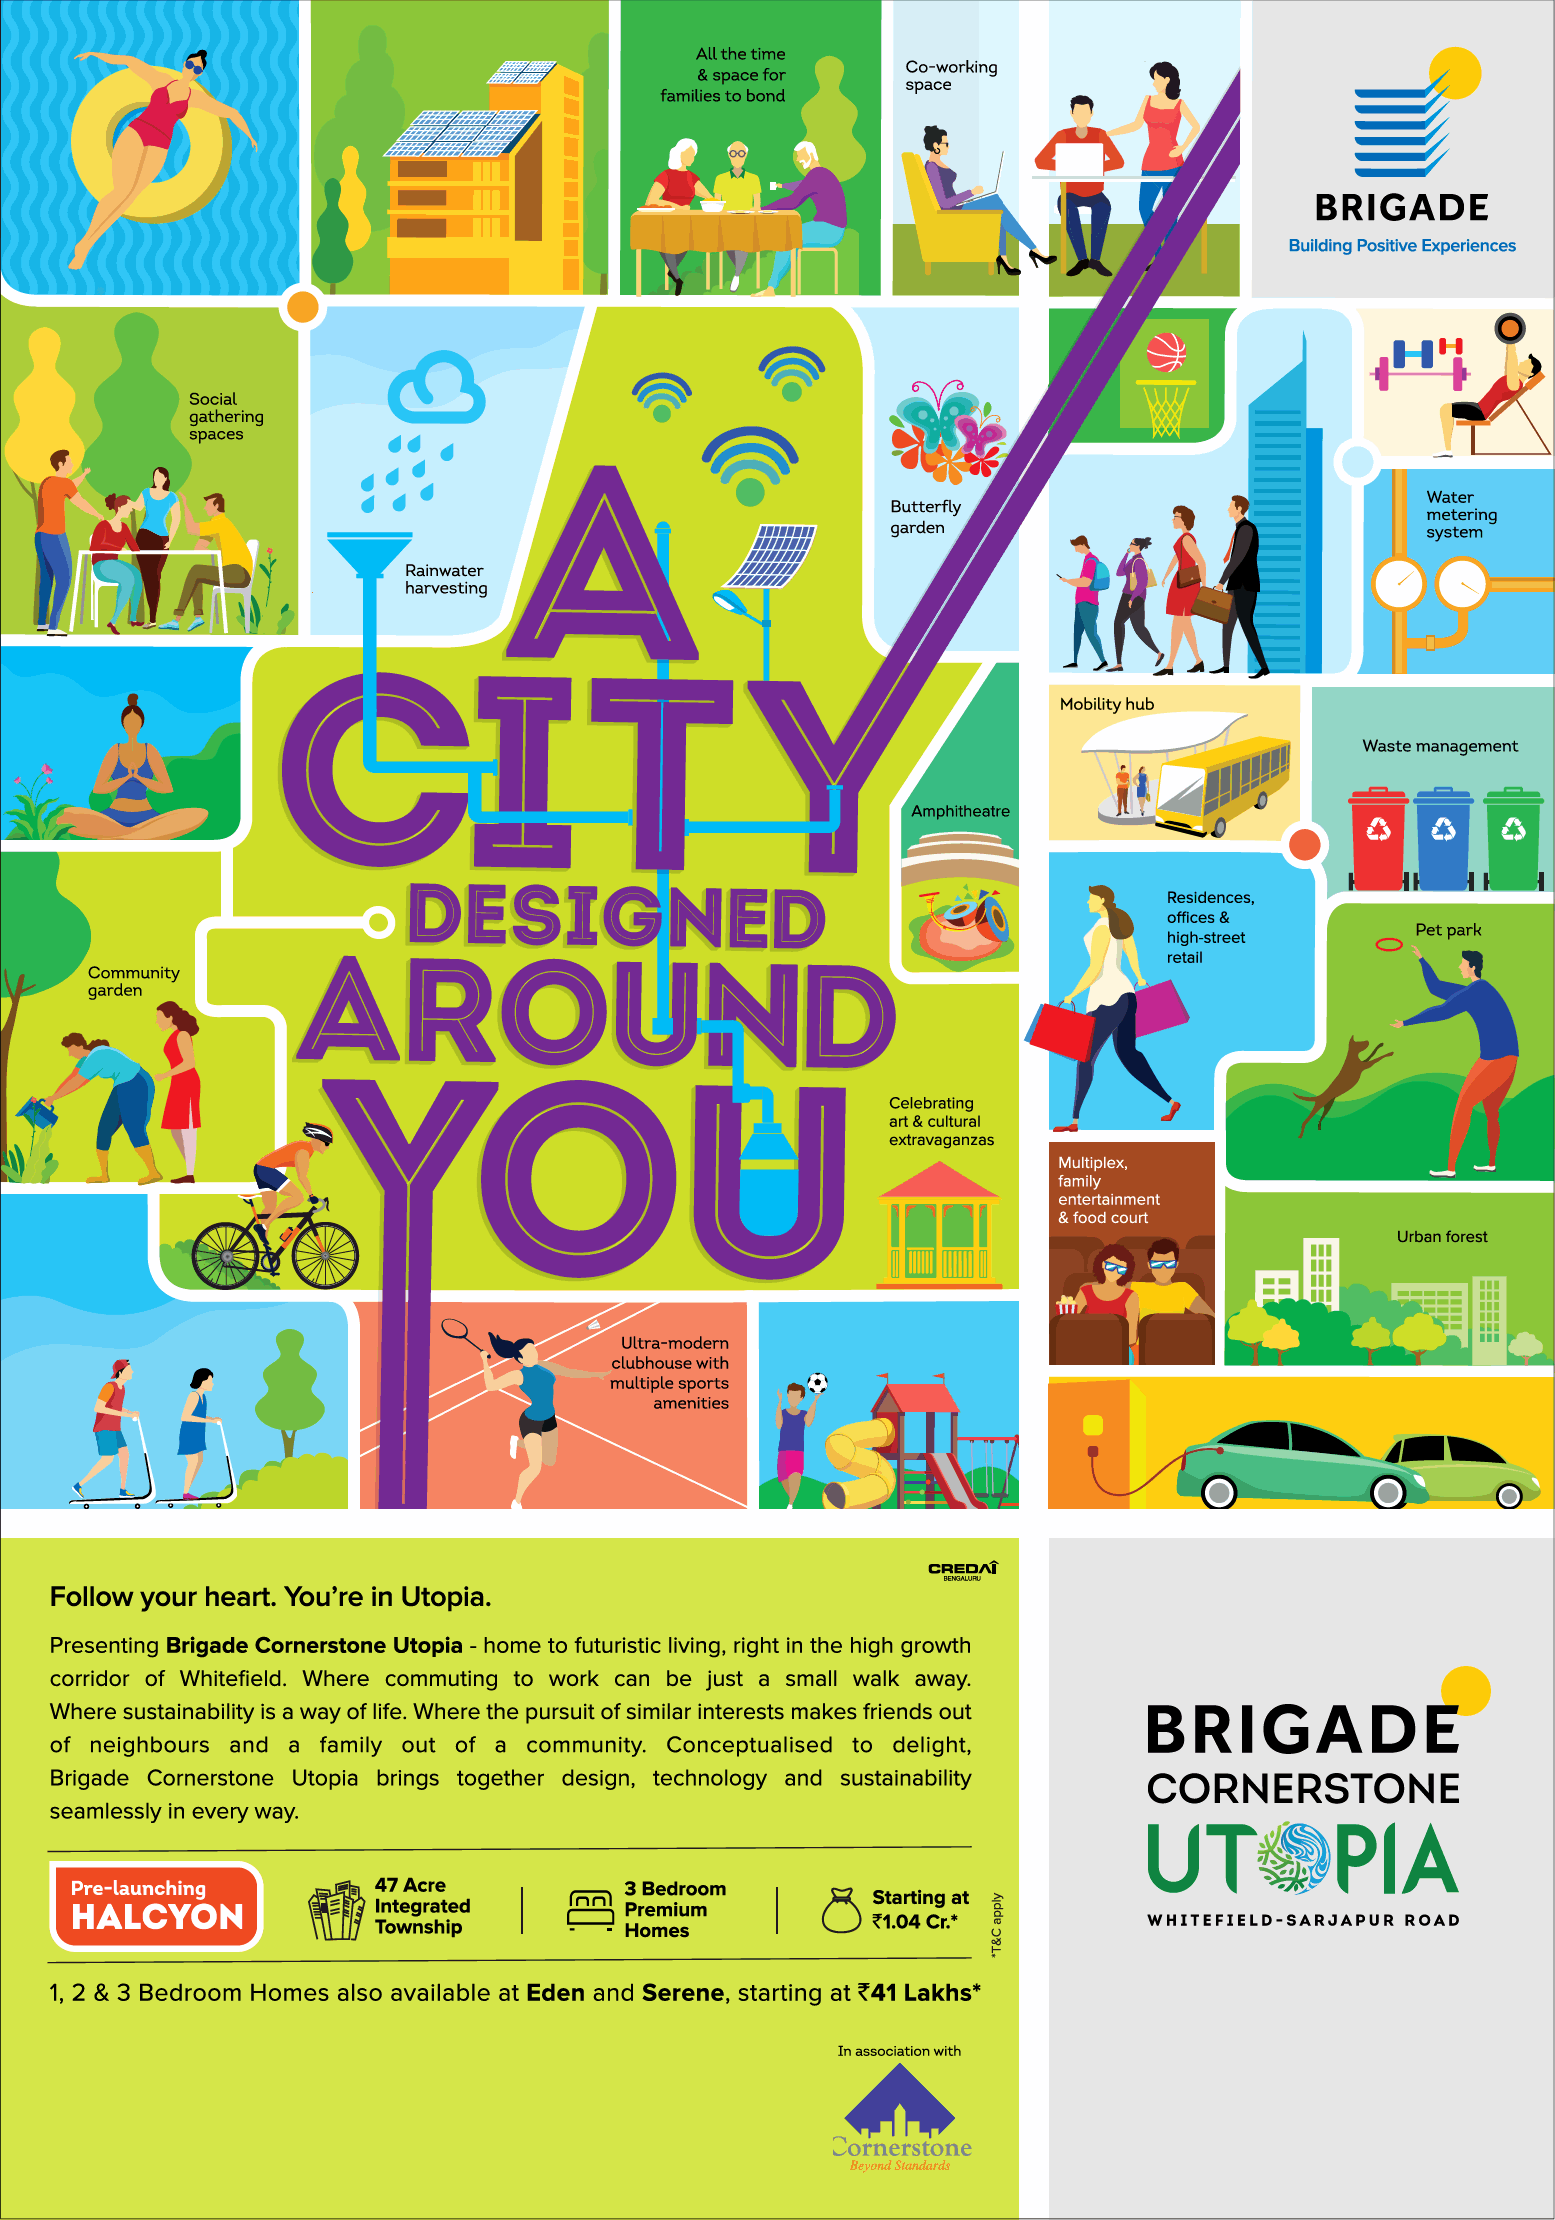 A city design around you is Brigade Cornerstone Utopia, Bangalore Update